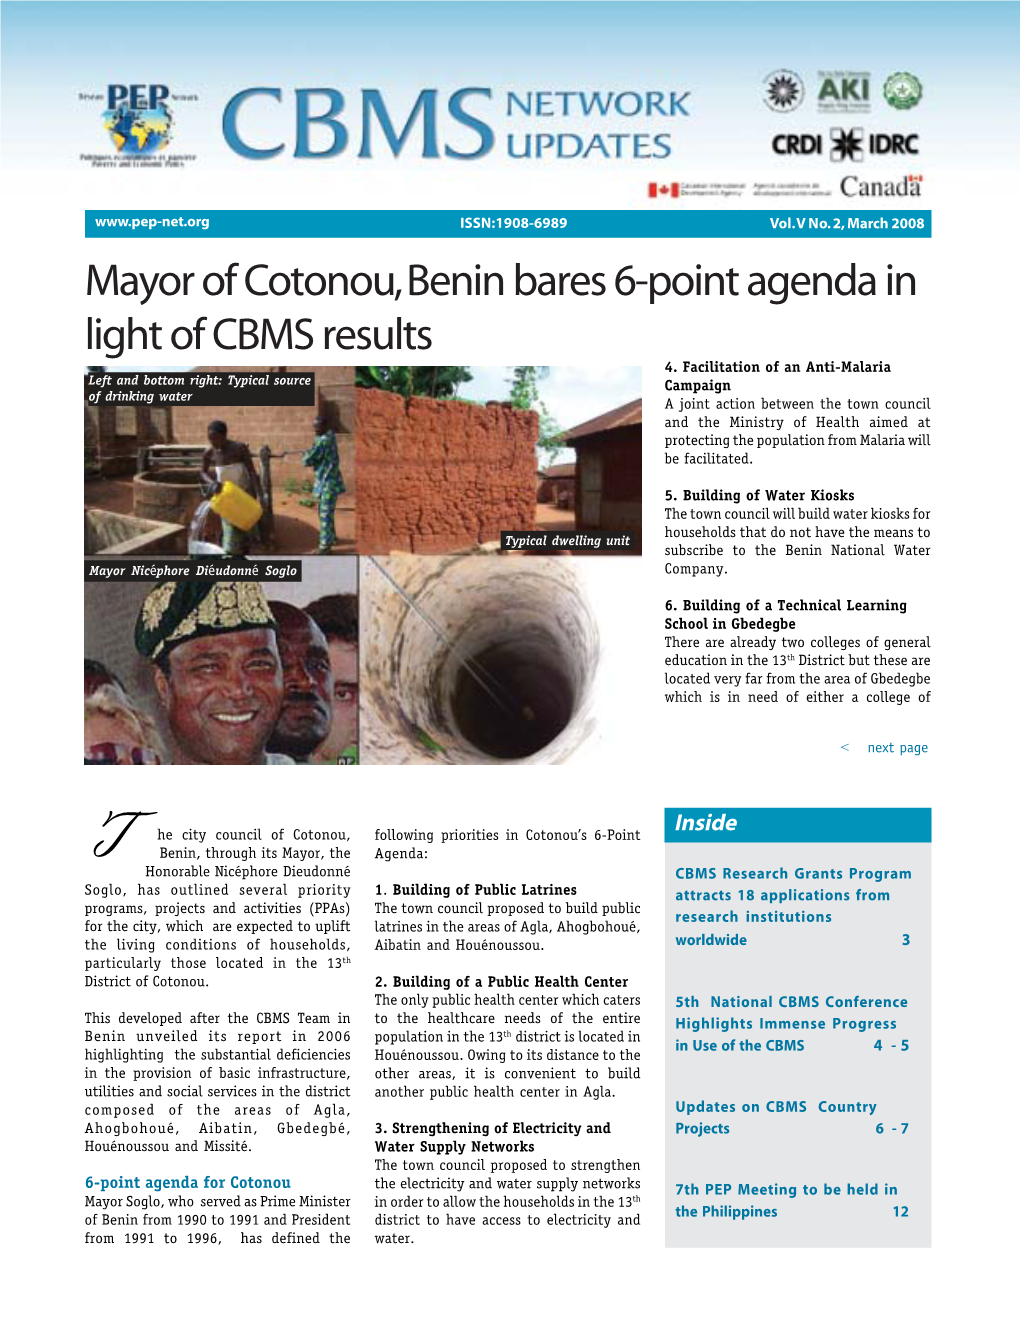 Mayor of Cotonou, Benin Bares 6-Point Agenda in Light of CBMS Results 4